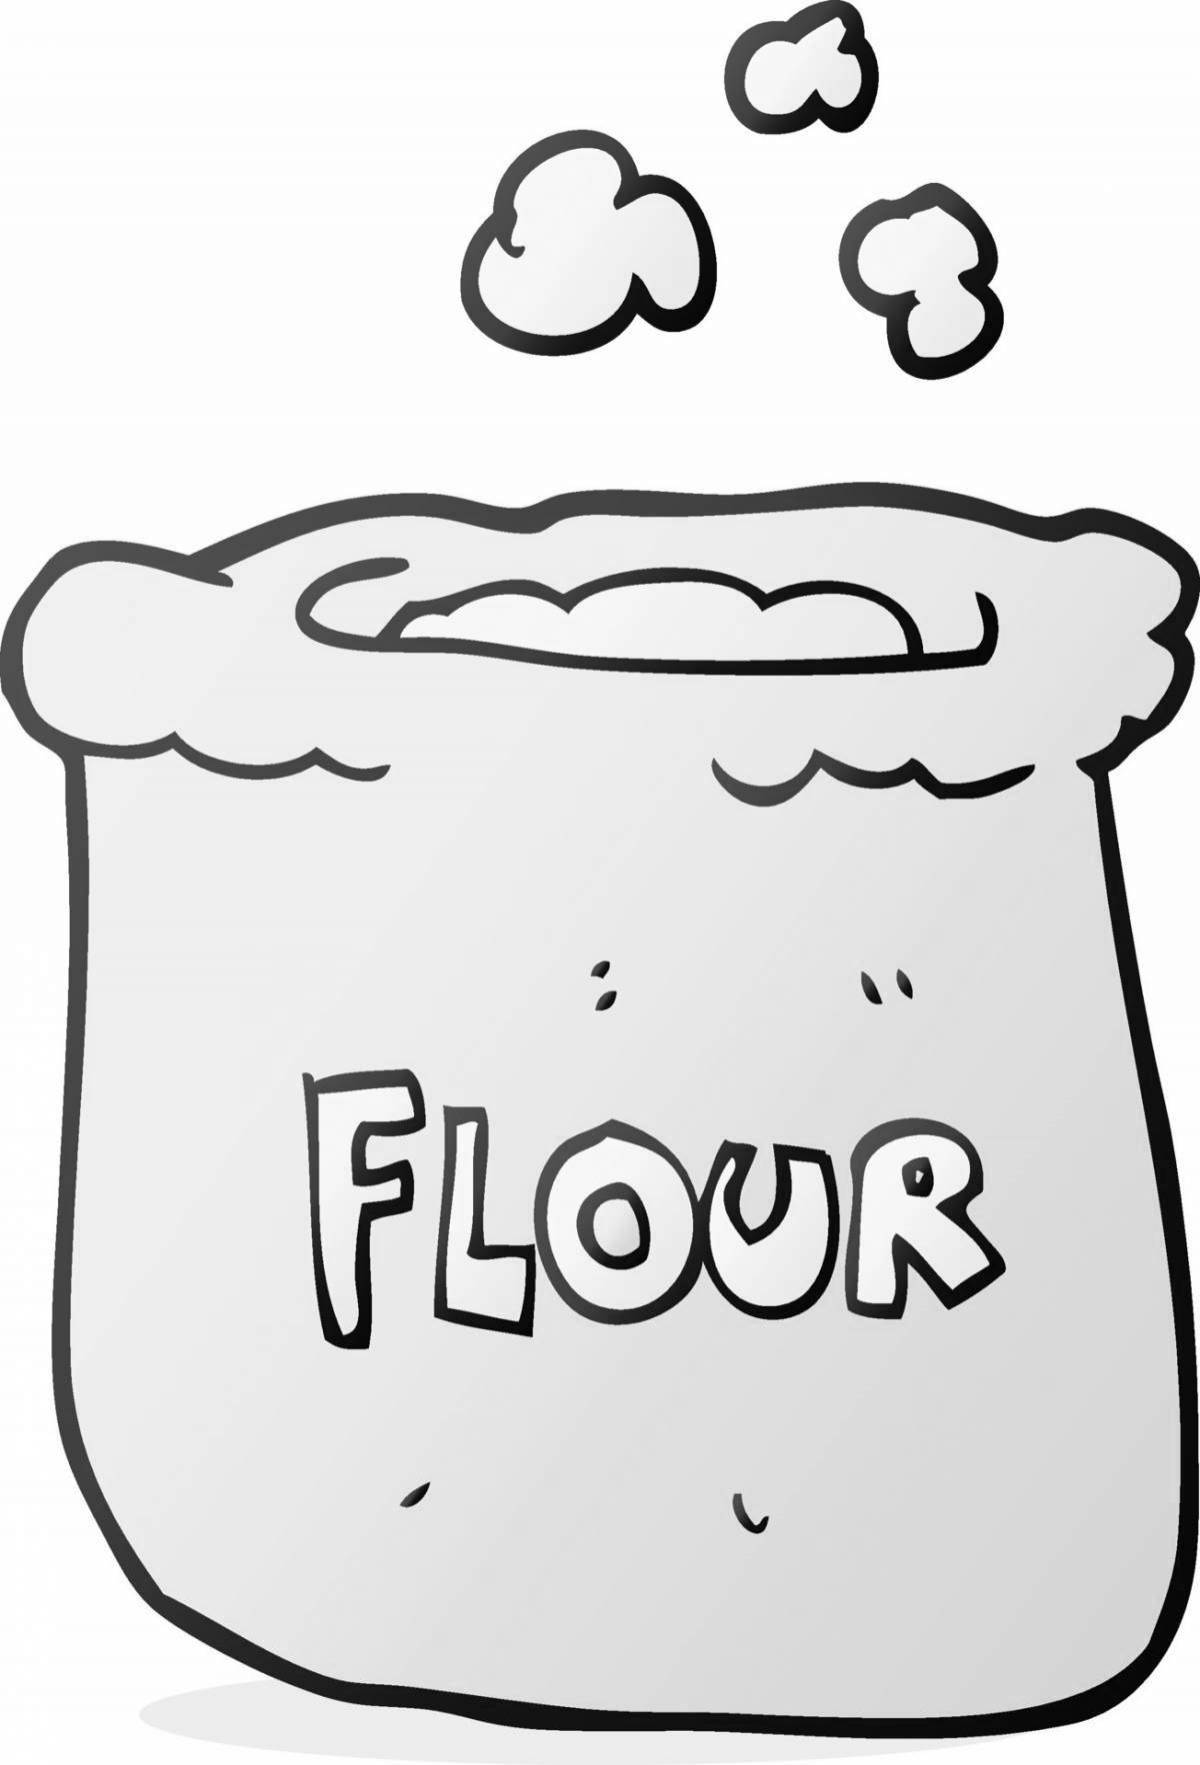 A Packet of flour рисунок